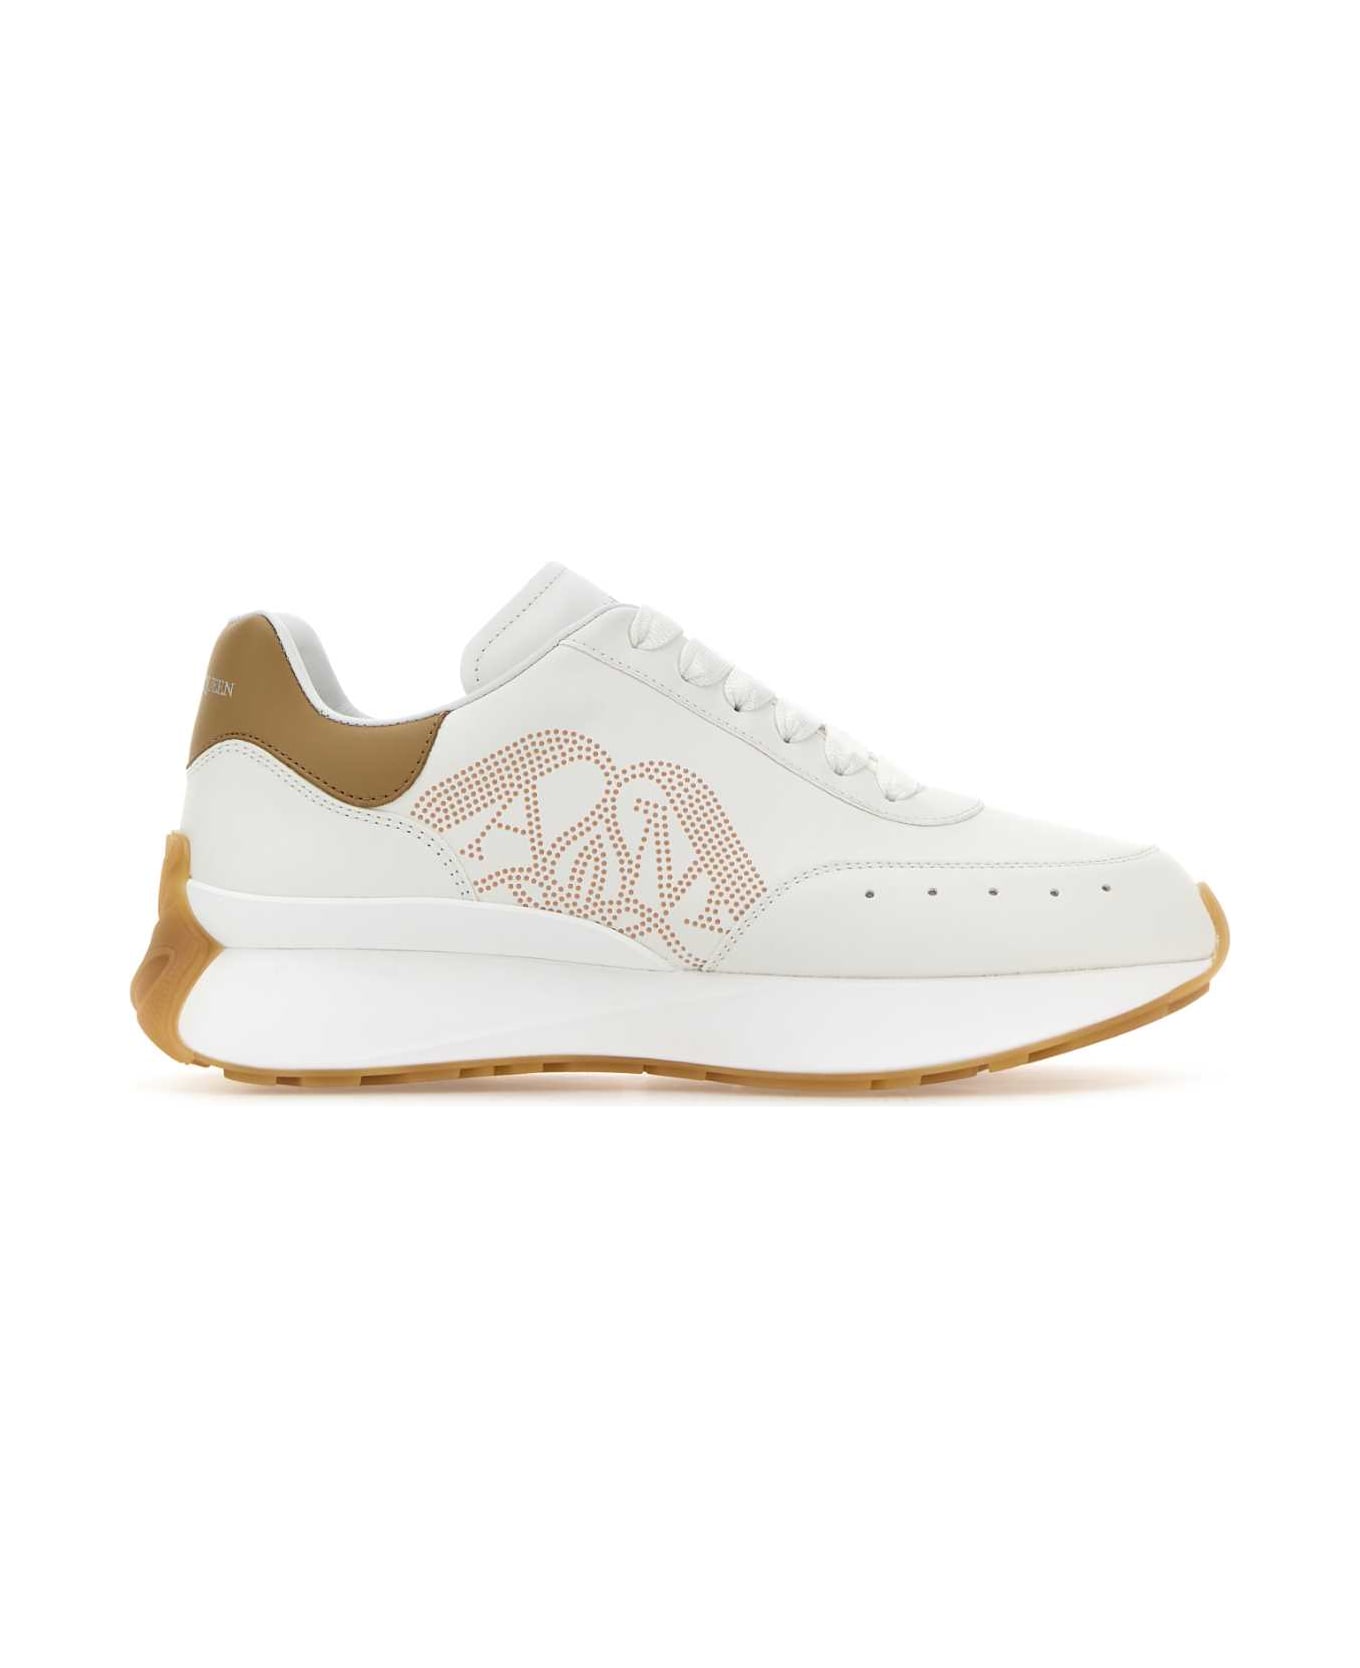 Alexander McQueen White Leather Sprint Runner Sneakers - WHITECAMELSILAMB.